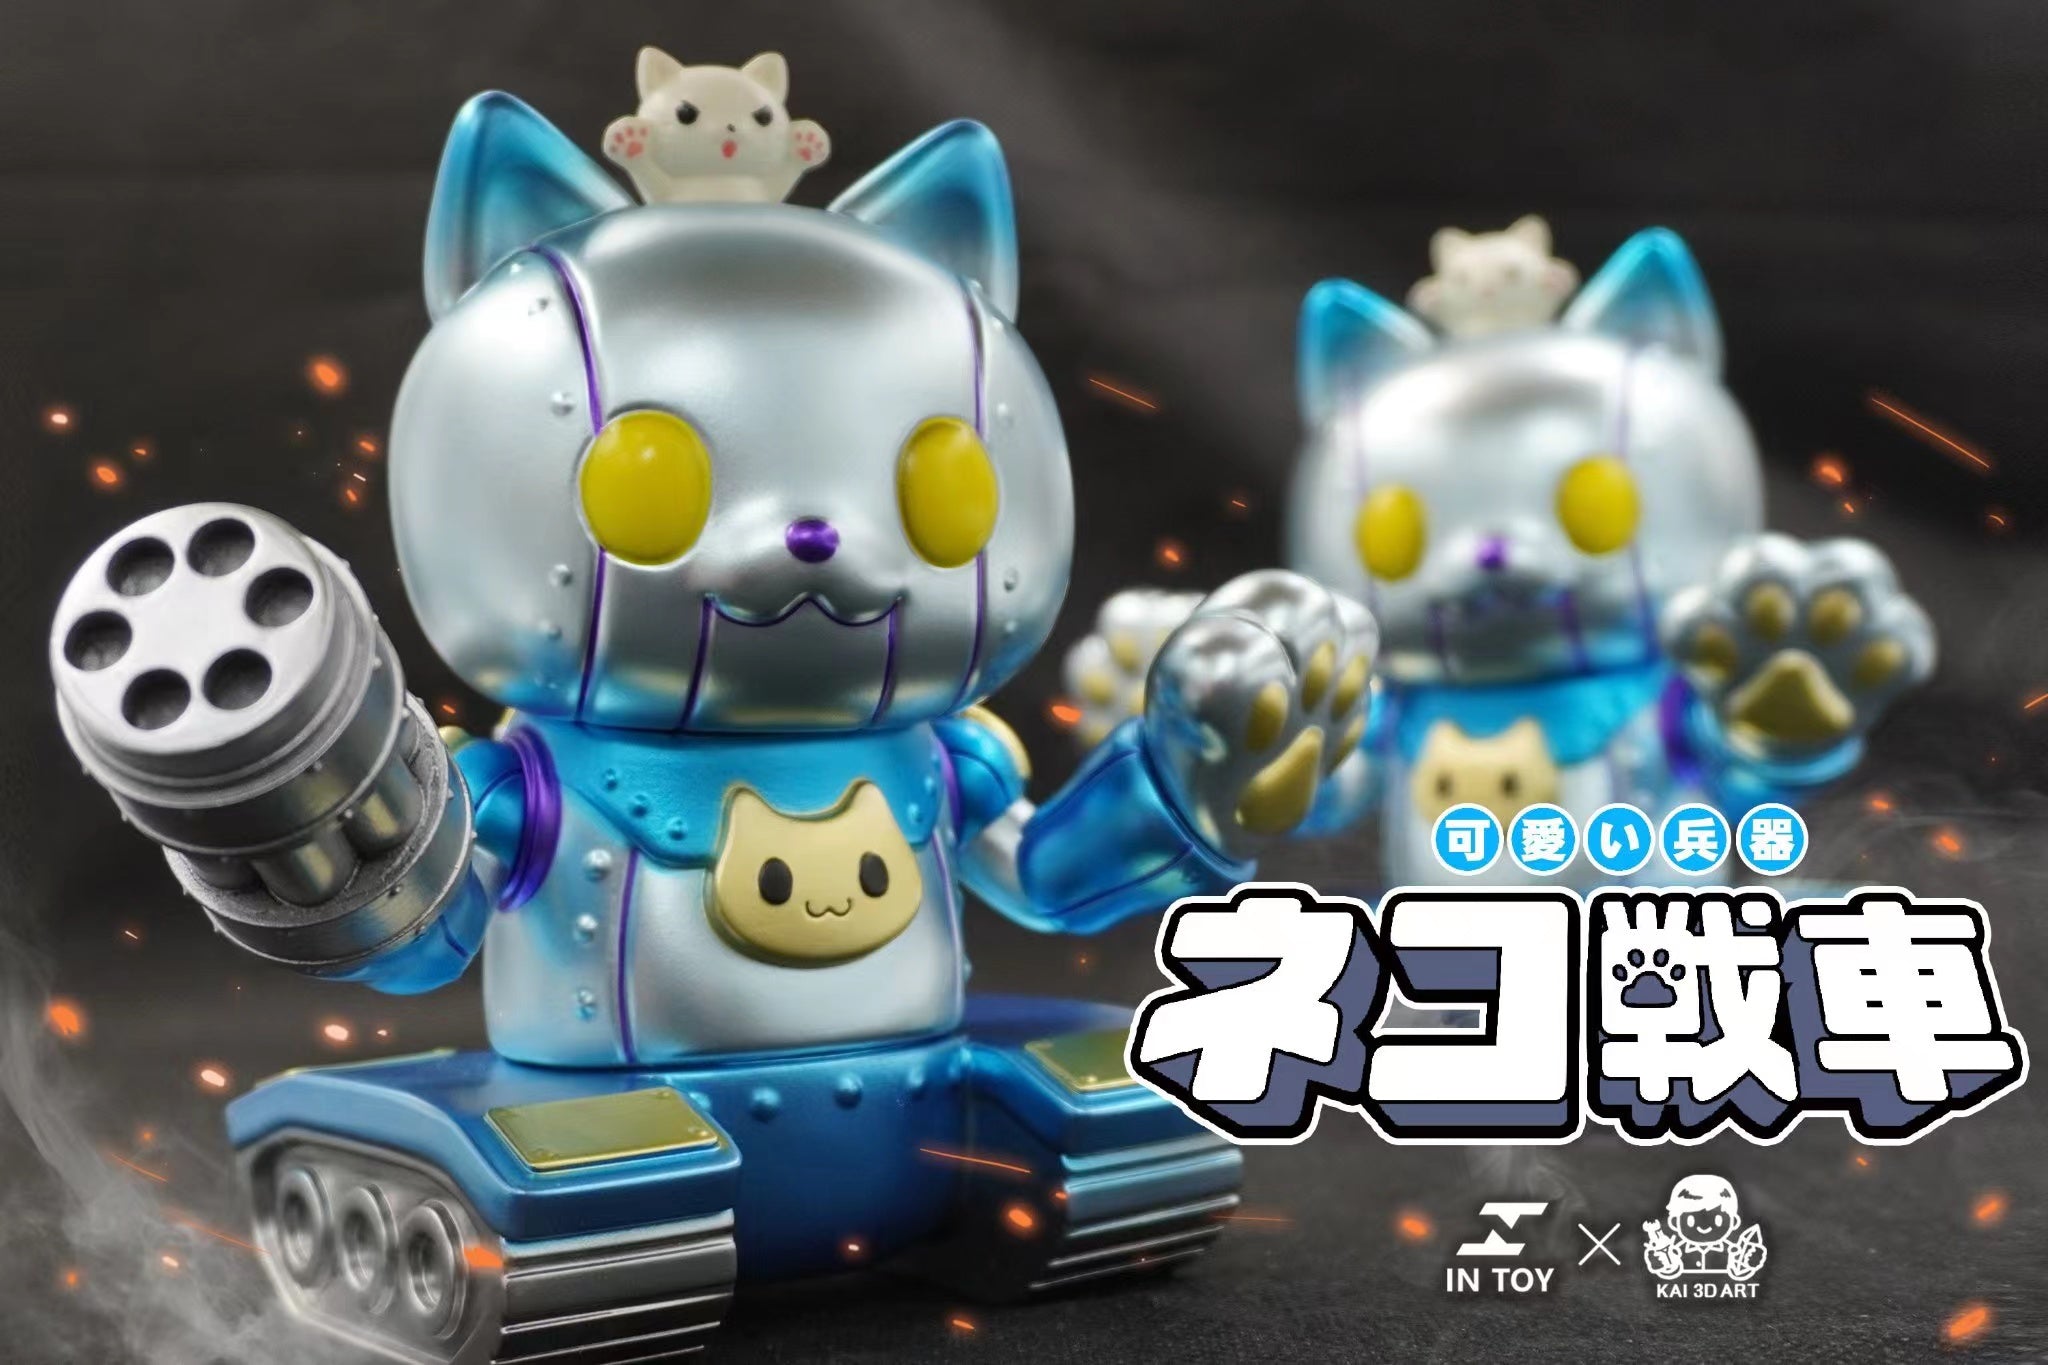 Cute weapon-chariot cat-MK002 by KAI 3D Art